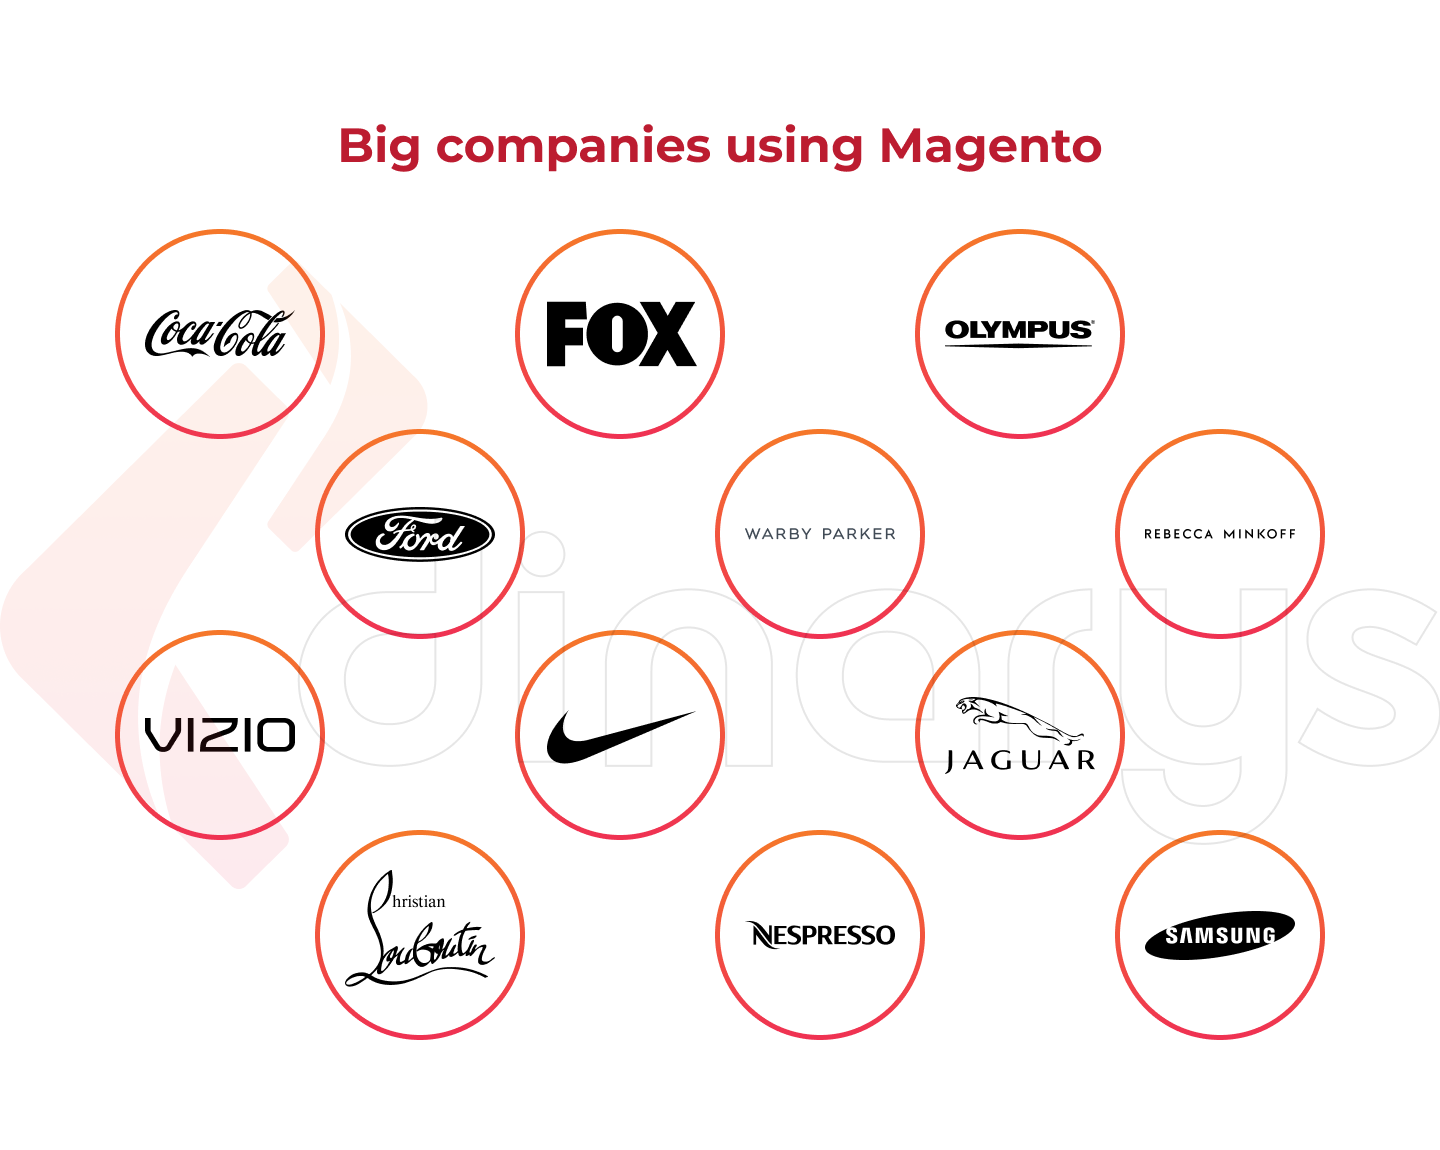 Big companies using Magento